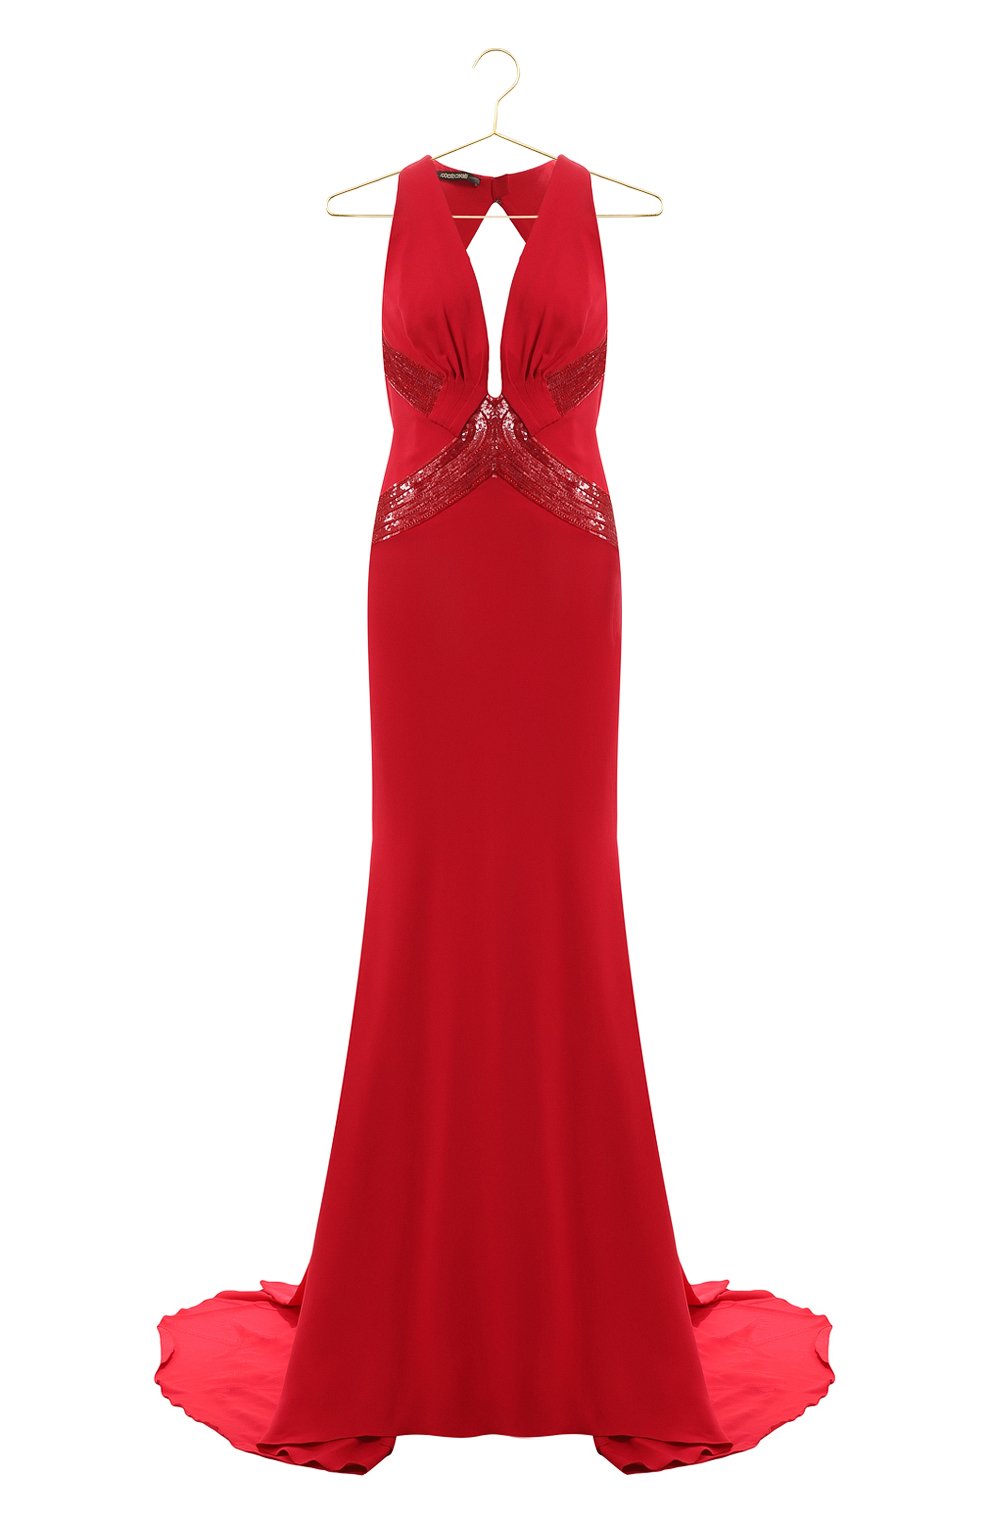 Платье из вискозы | Roberto Cavalli | Красный - 1